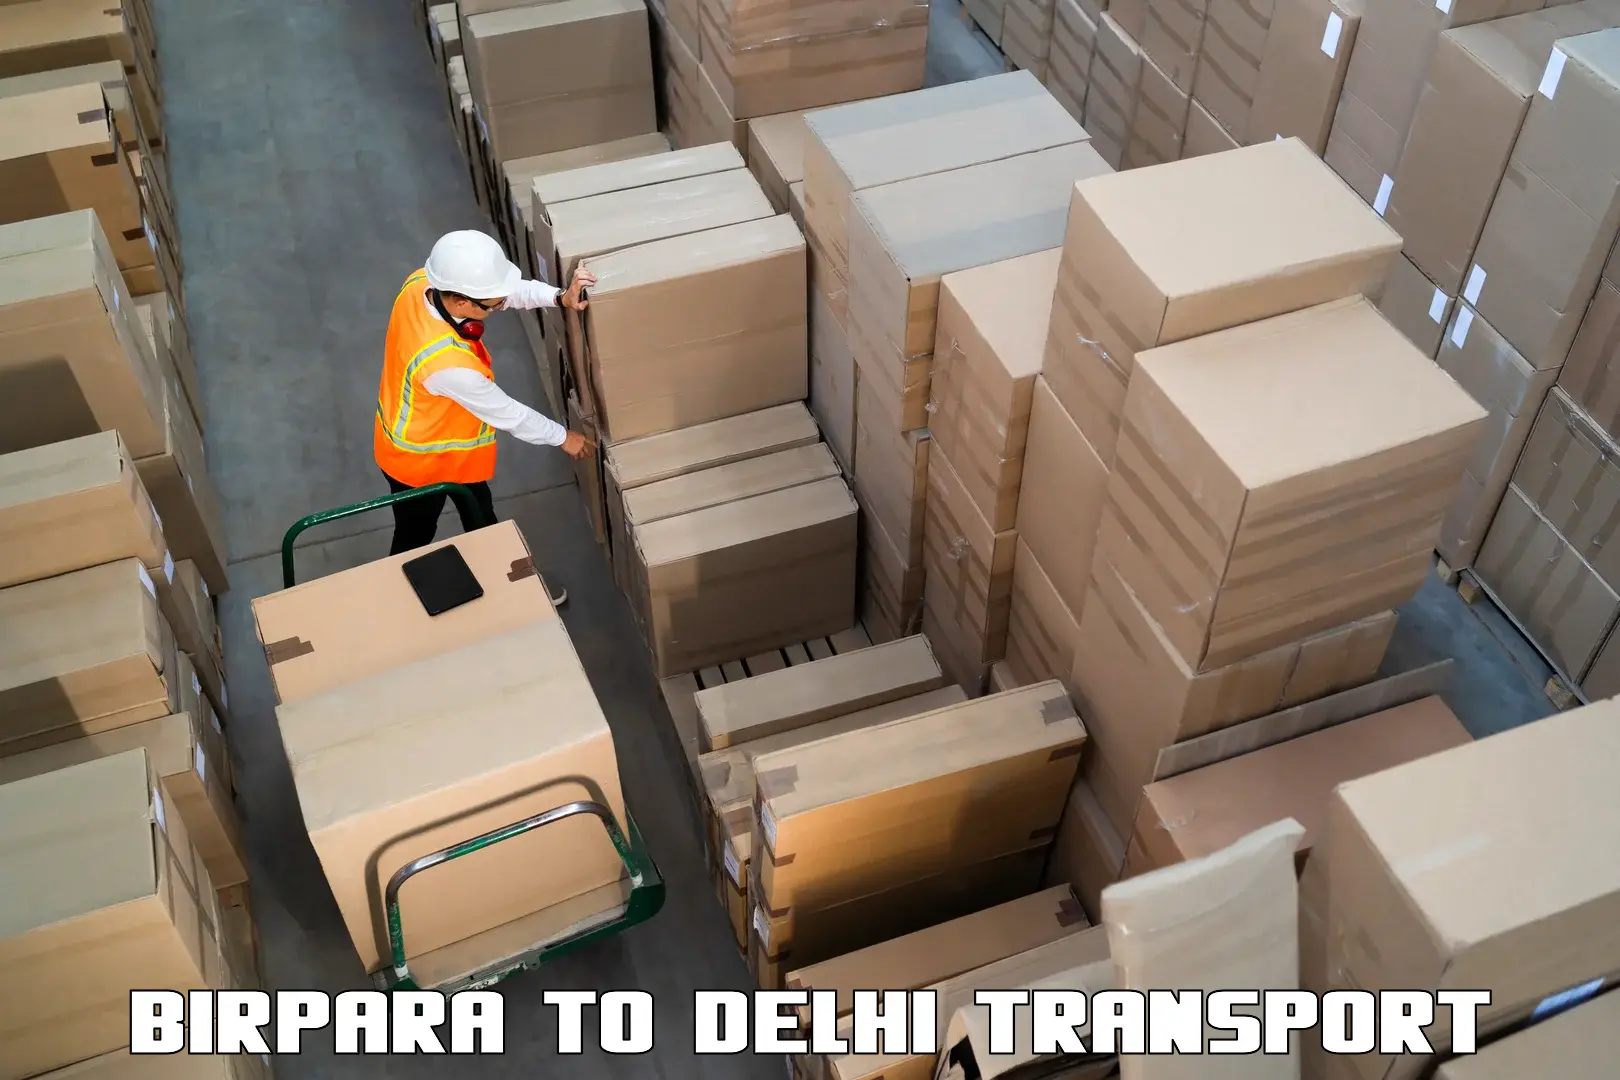 Truck transport companies in India Birpara to Burari